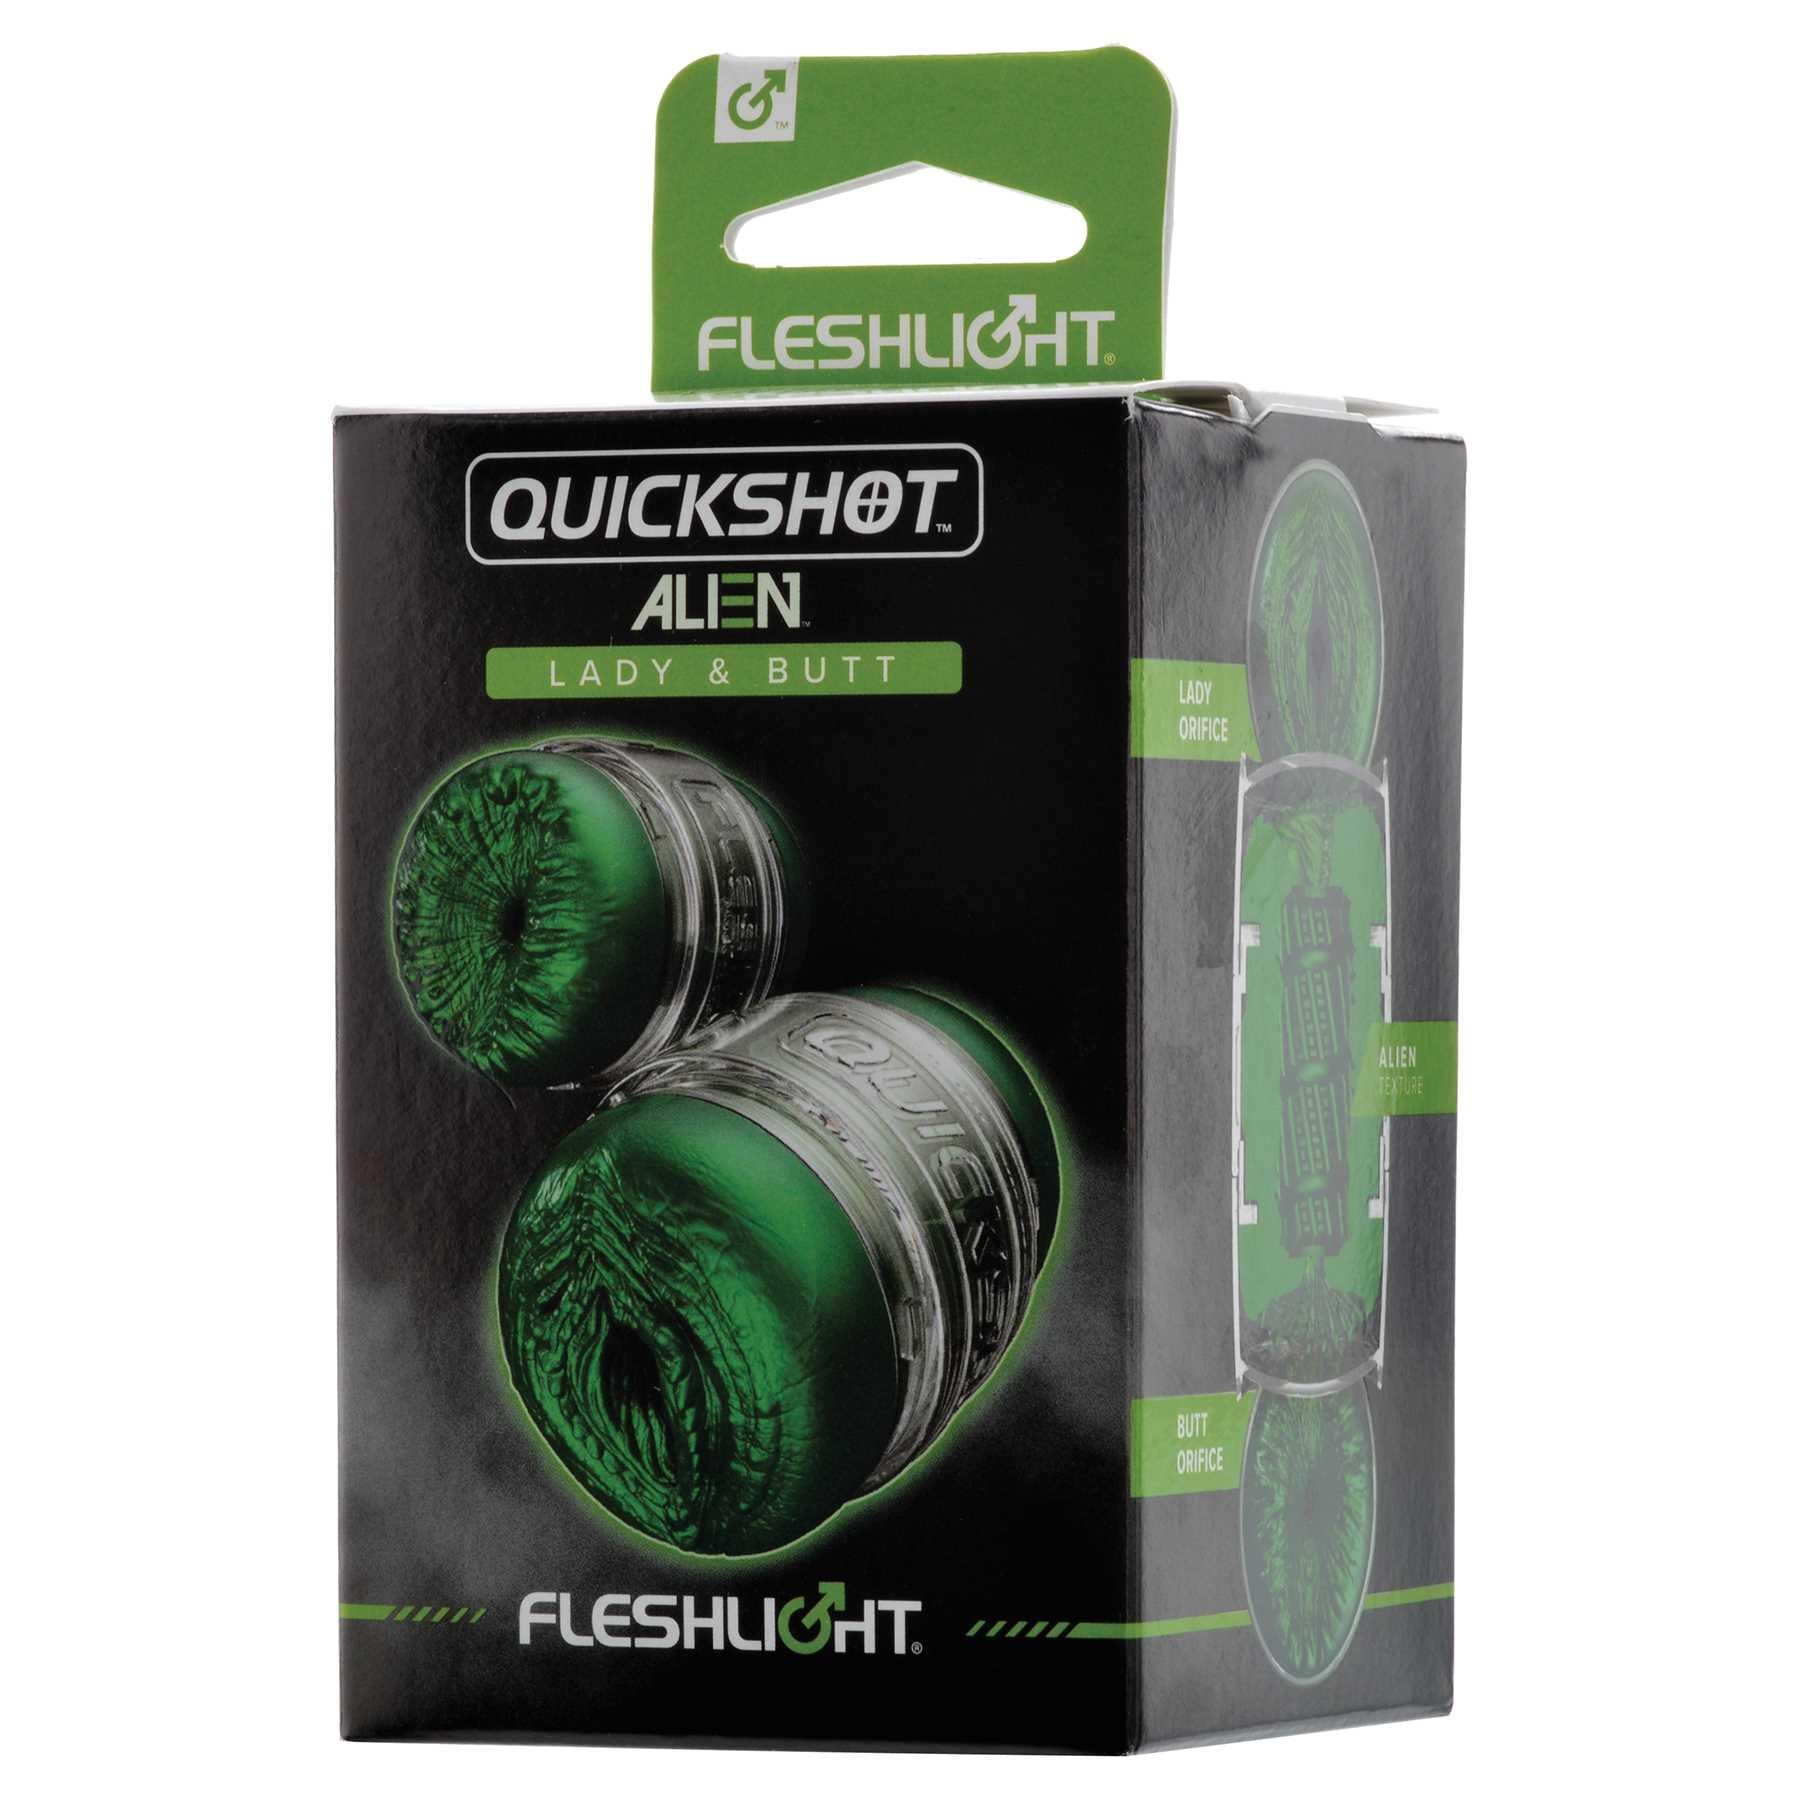 fleshlight quickshot alien lady & butt box packaging